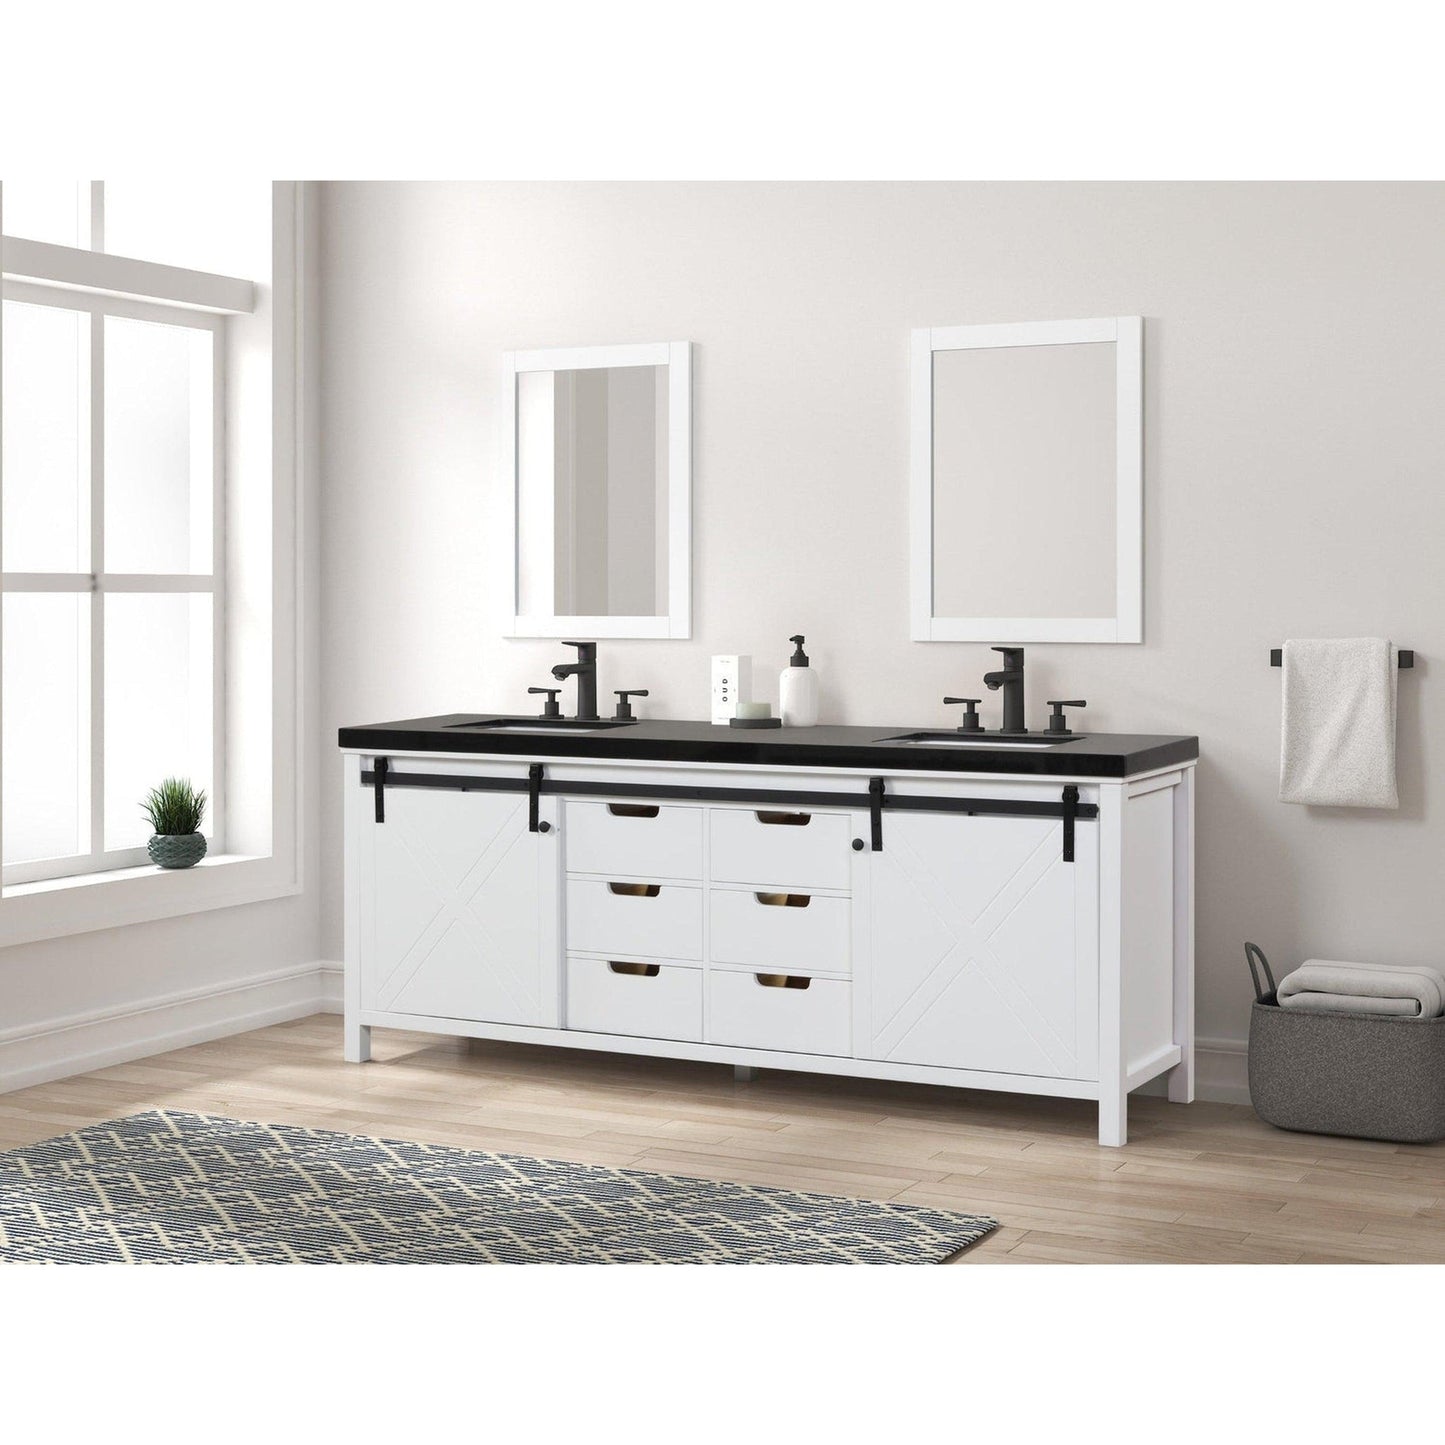 Eviva Dallas 84” x 34” White Freestanding Bathroom Vanity With Black Granite Countertop and Double Undermount Sink